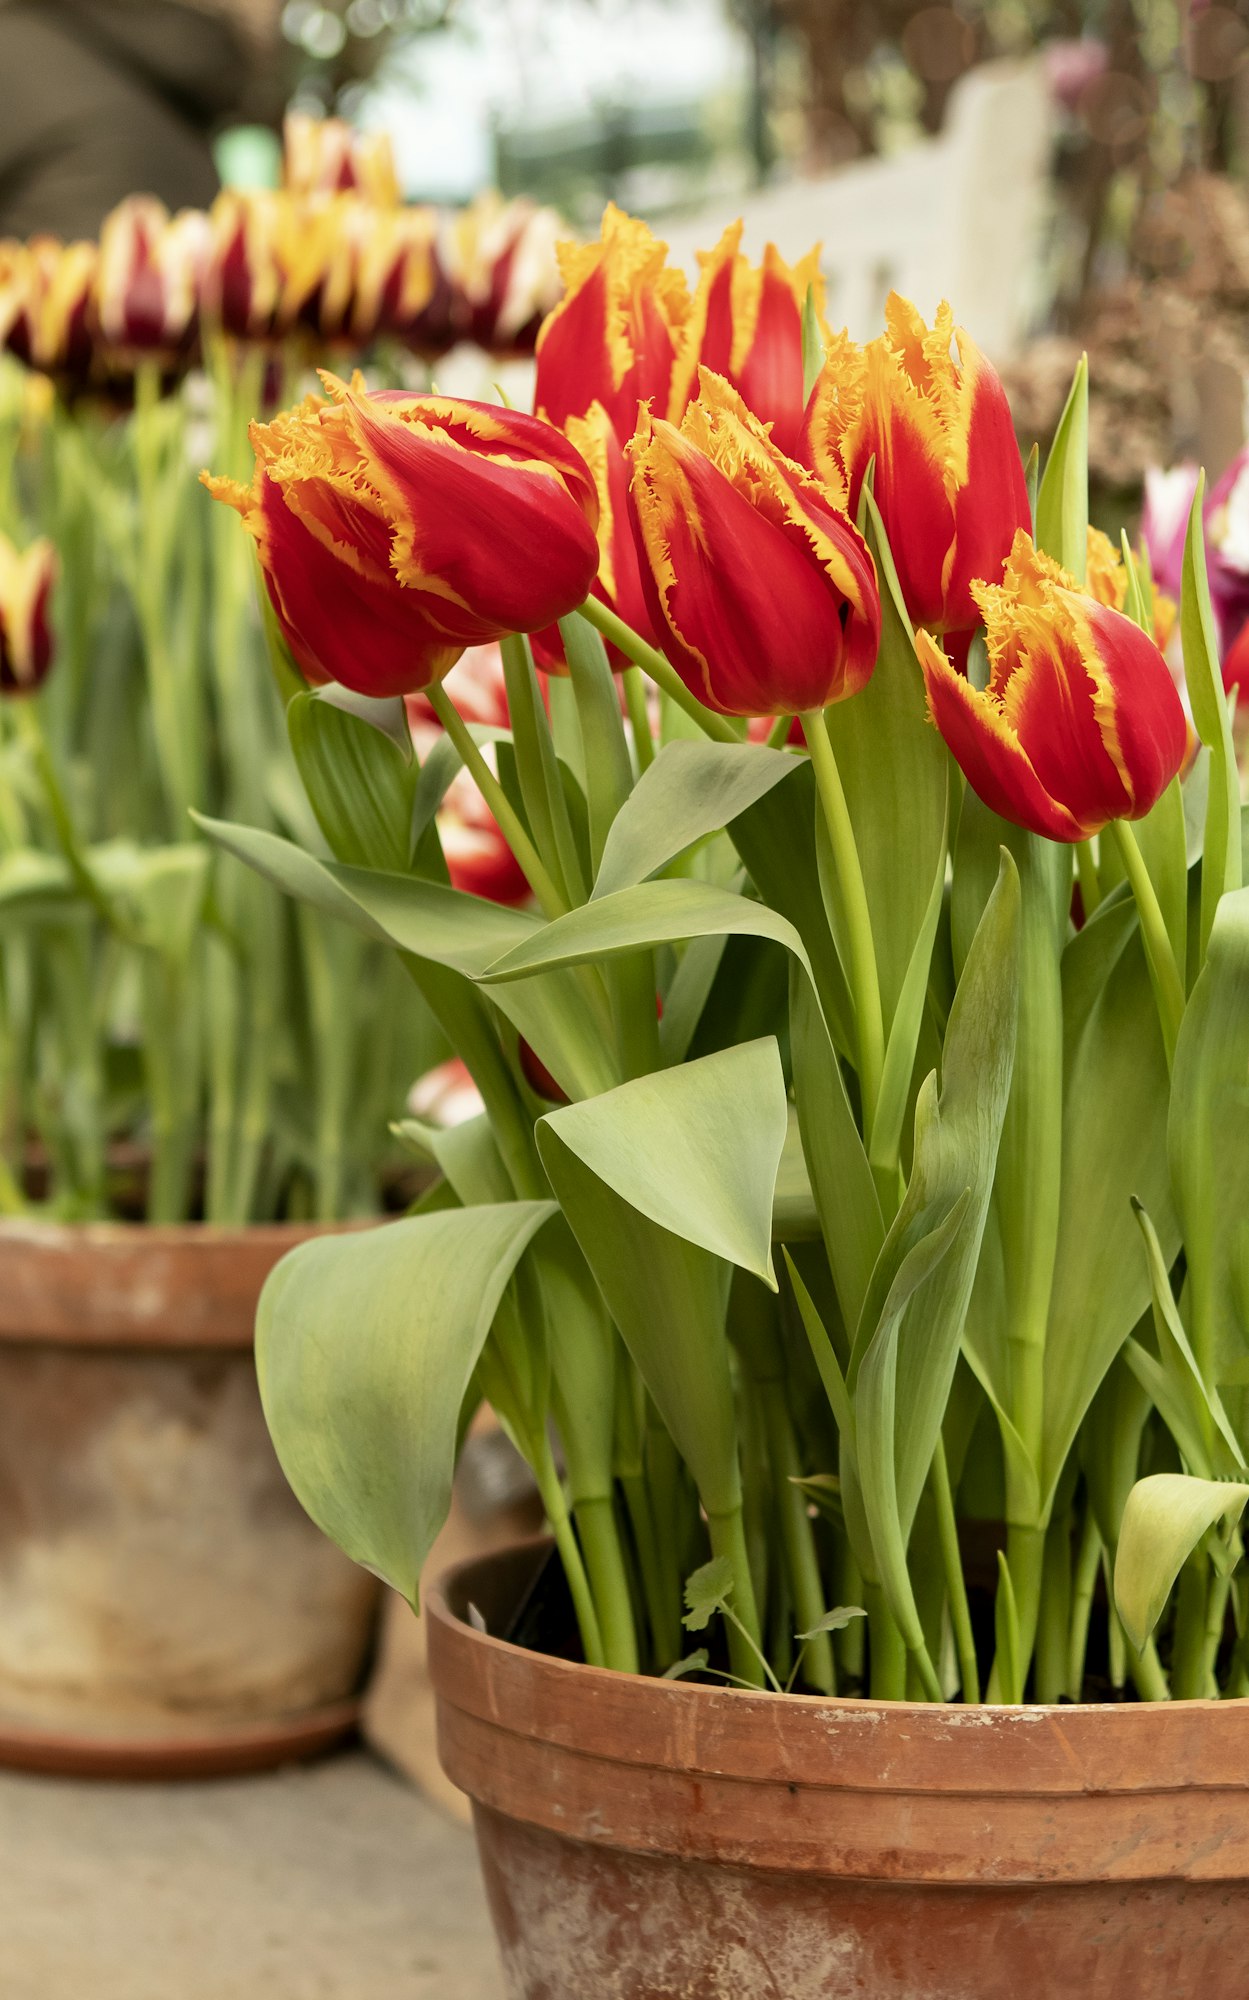 Red tulips flowers in the garden